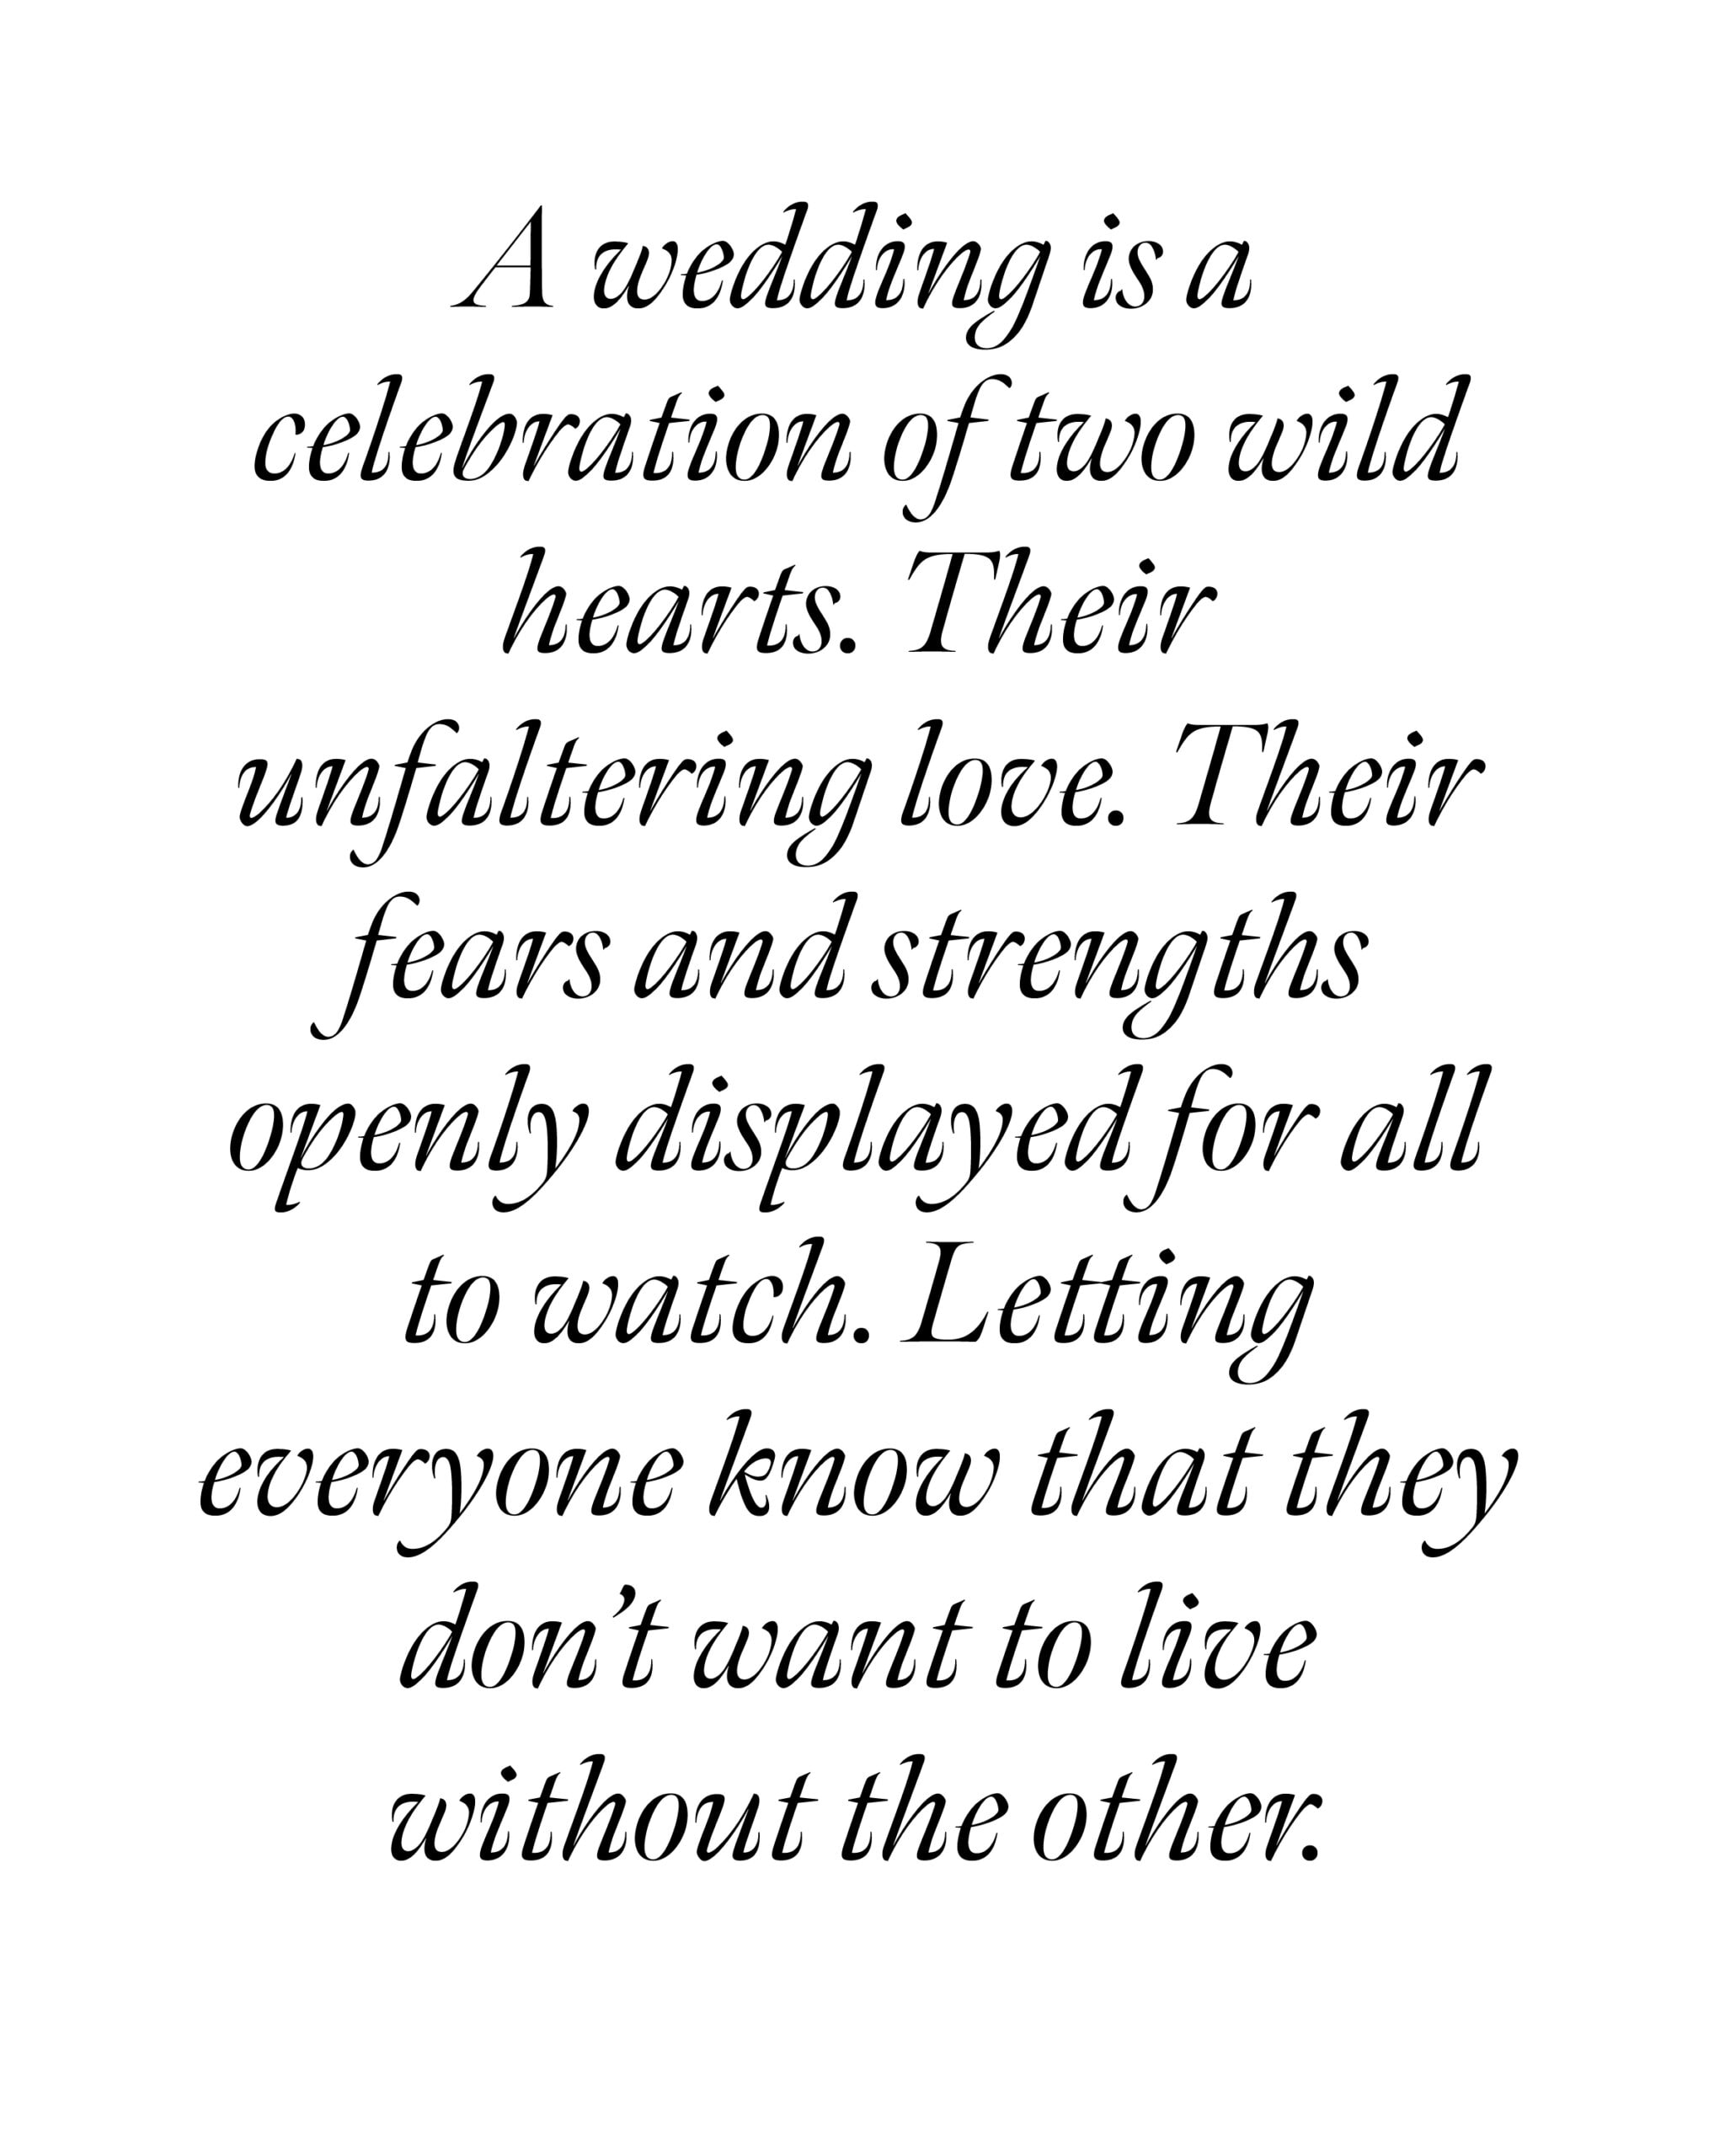 somerset wedding photographer quote